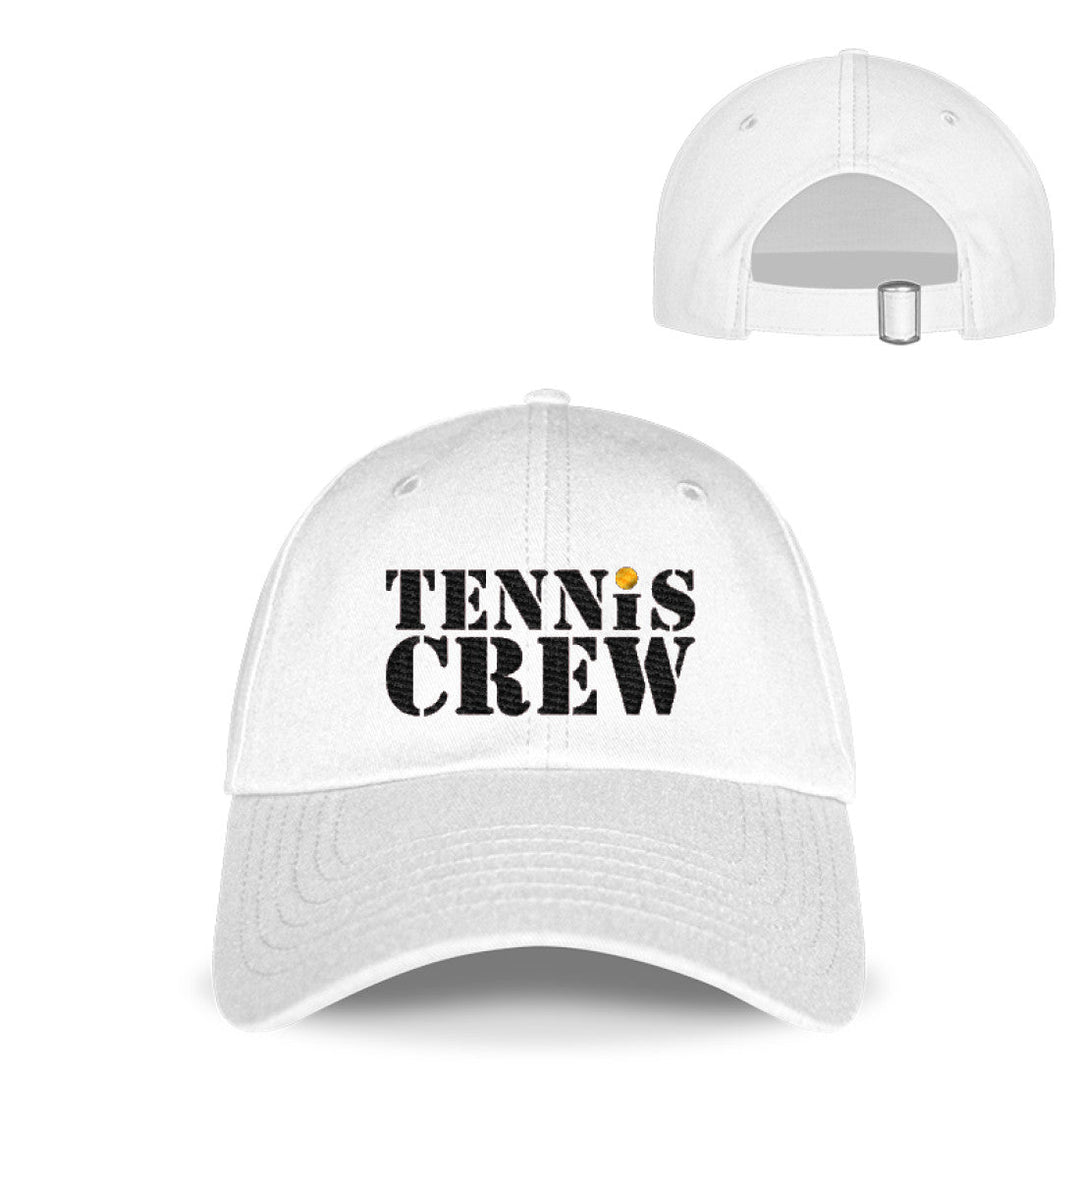 Tennis Crew | Organic Cap (bestickt) - Matchpoint24 - Kleidung für Tennisfans